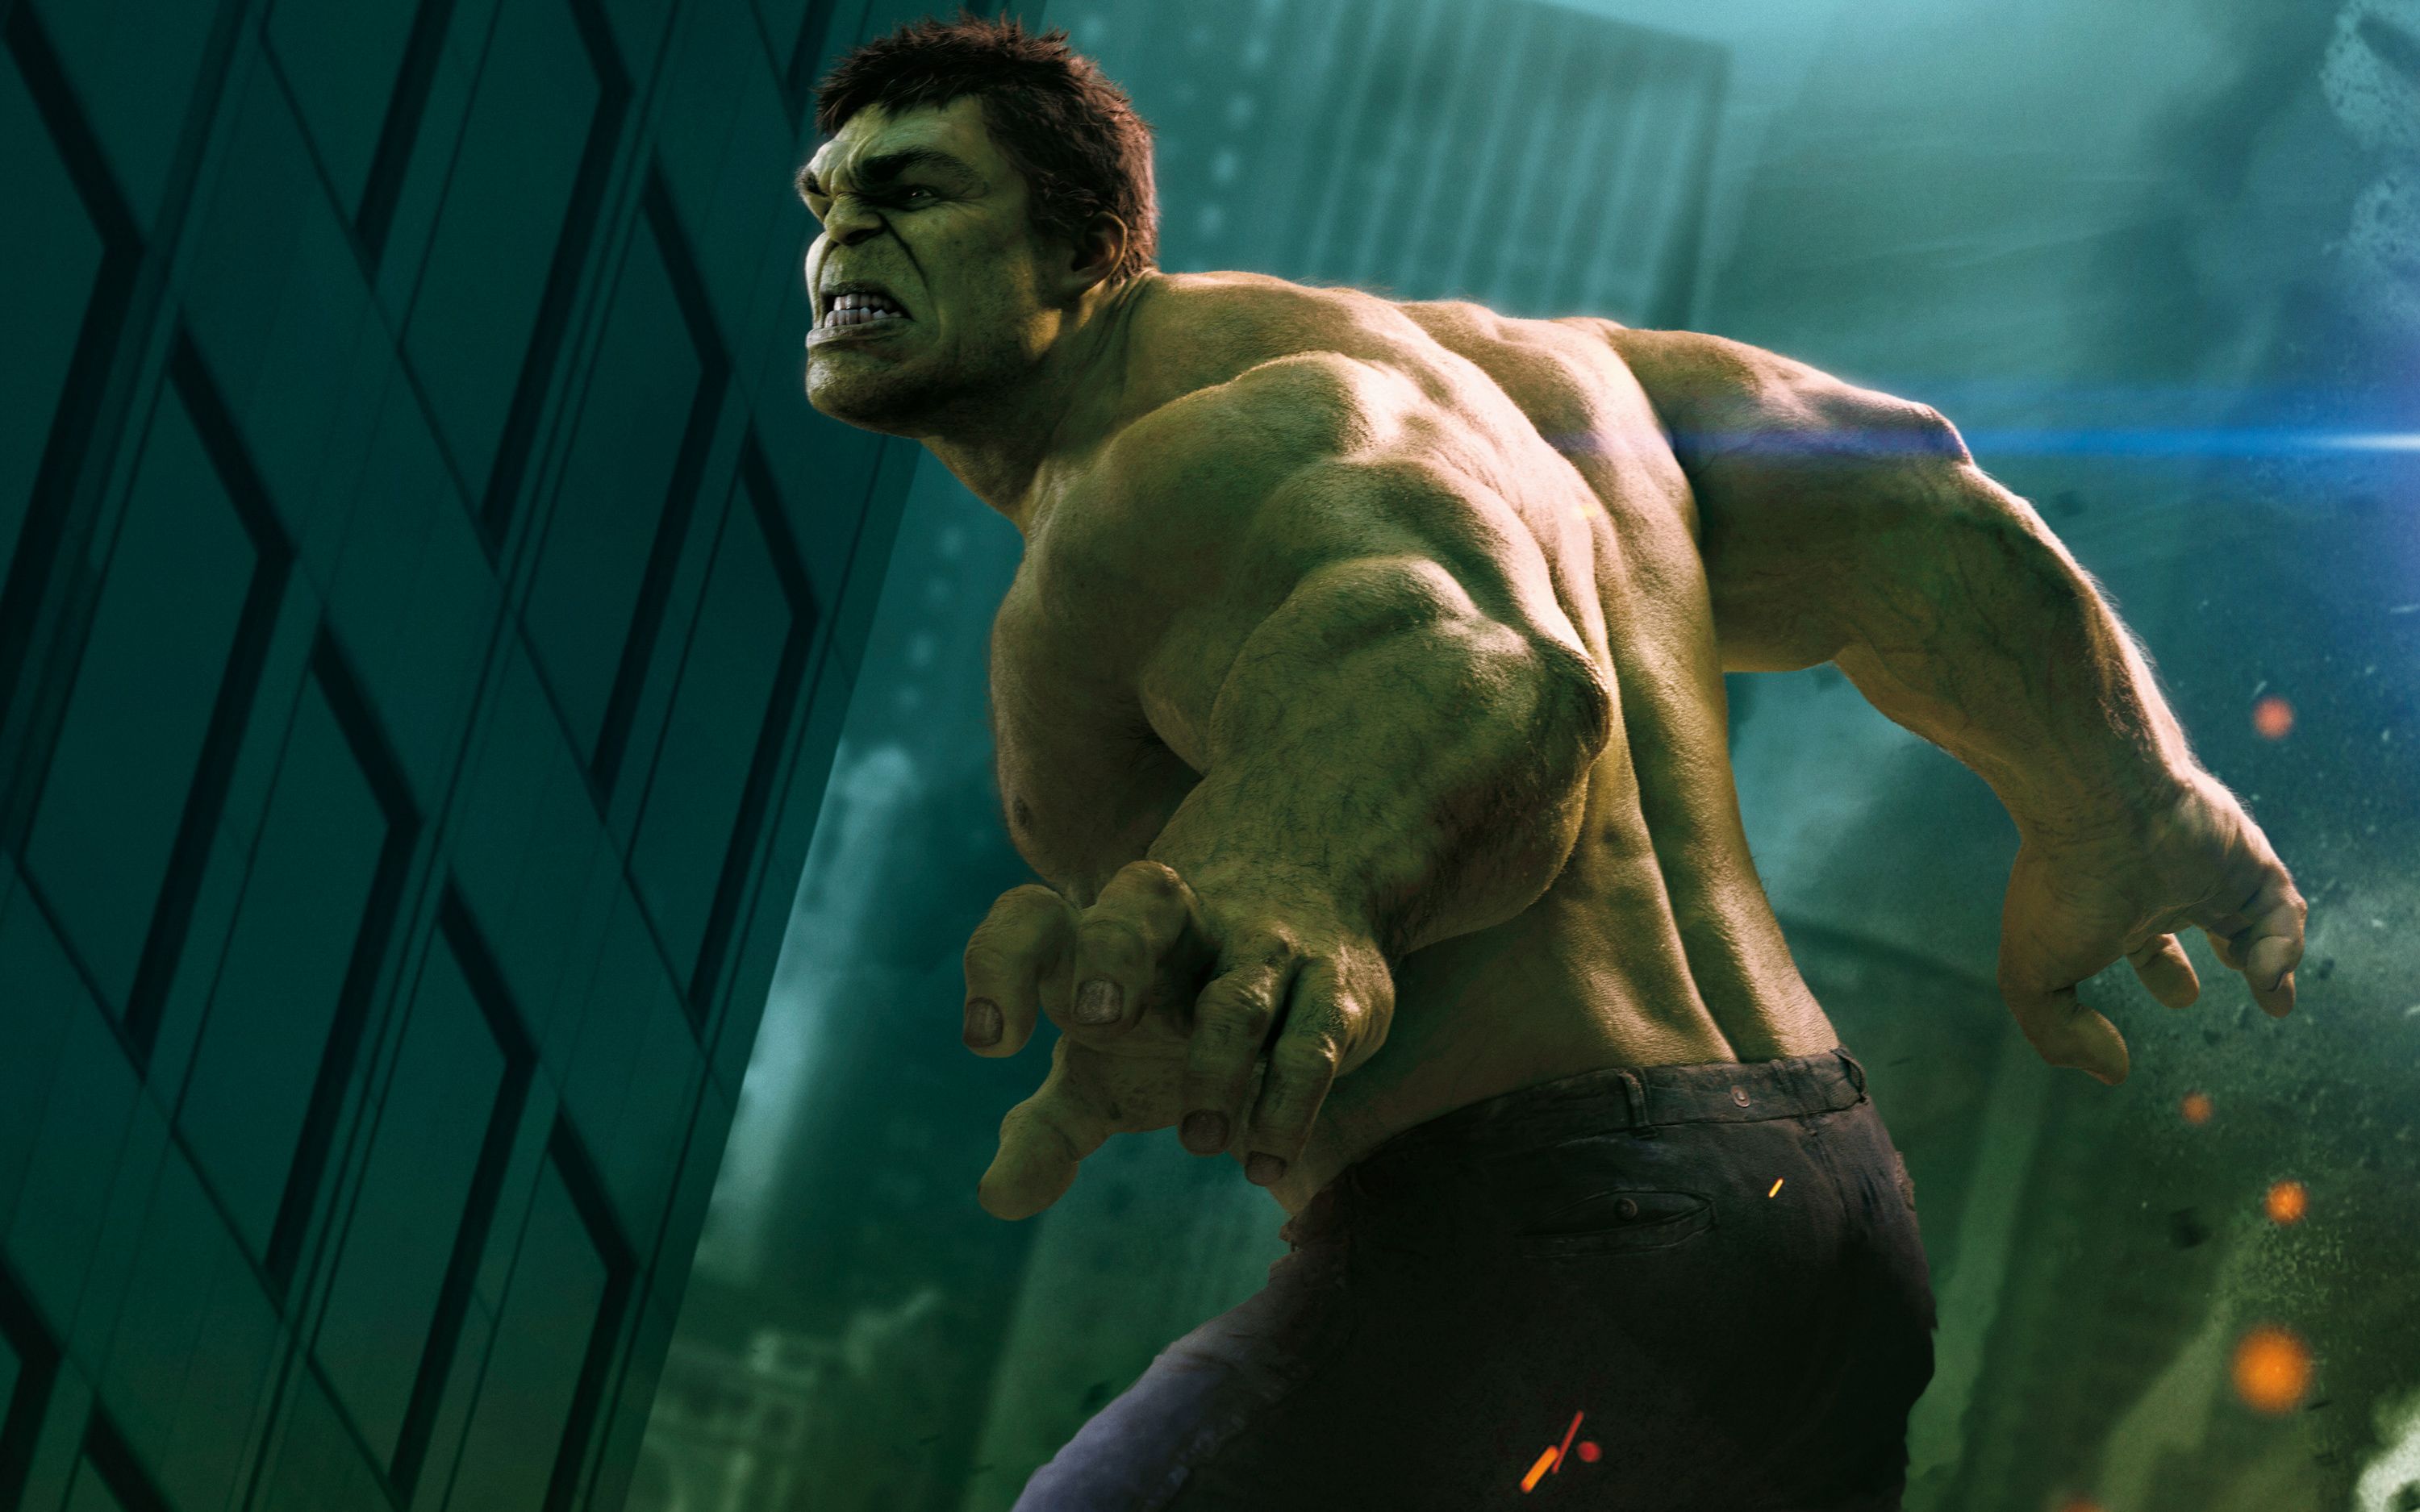 Most Realistic Hulk Yet